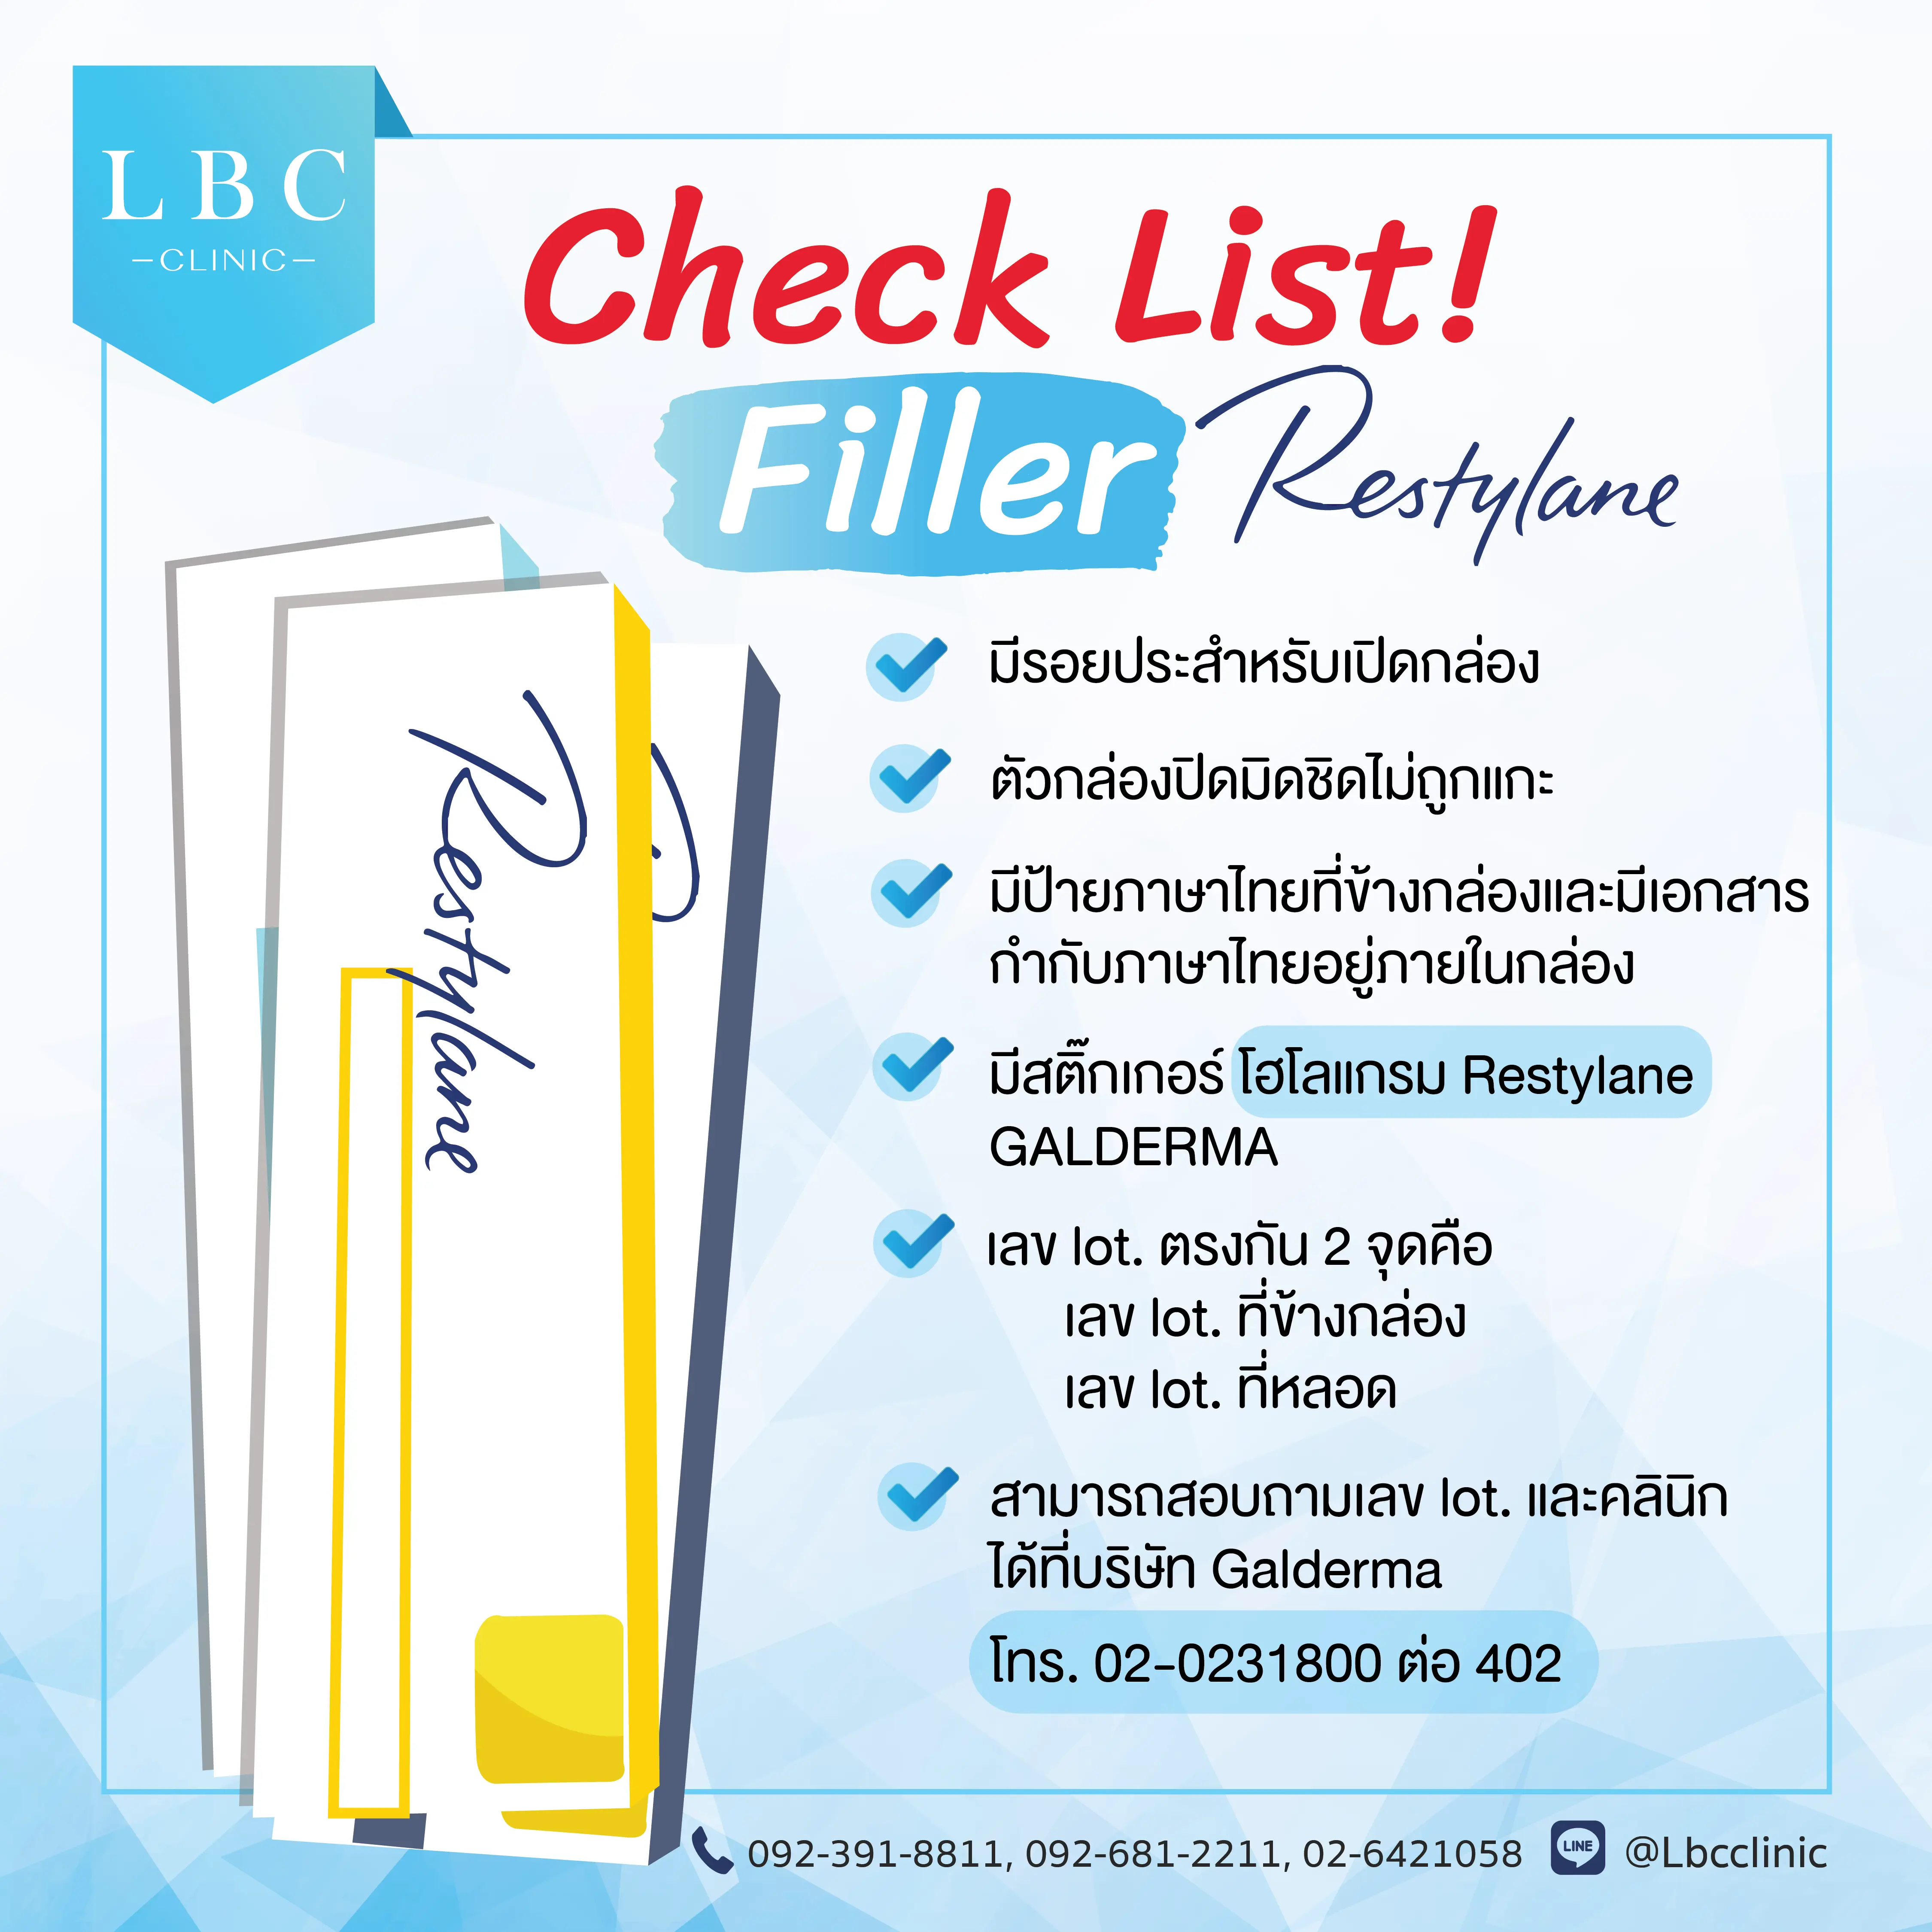 Lbc Clinic ฟิลเลอร์ Check List